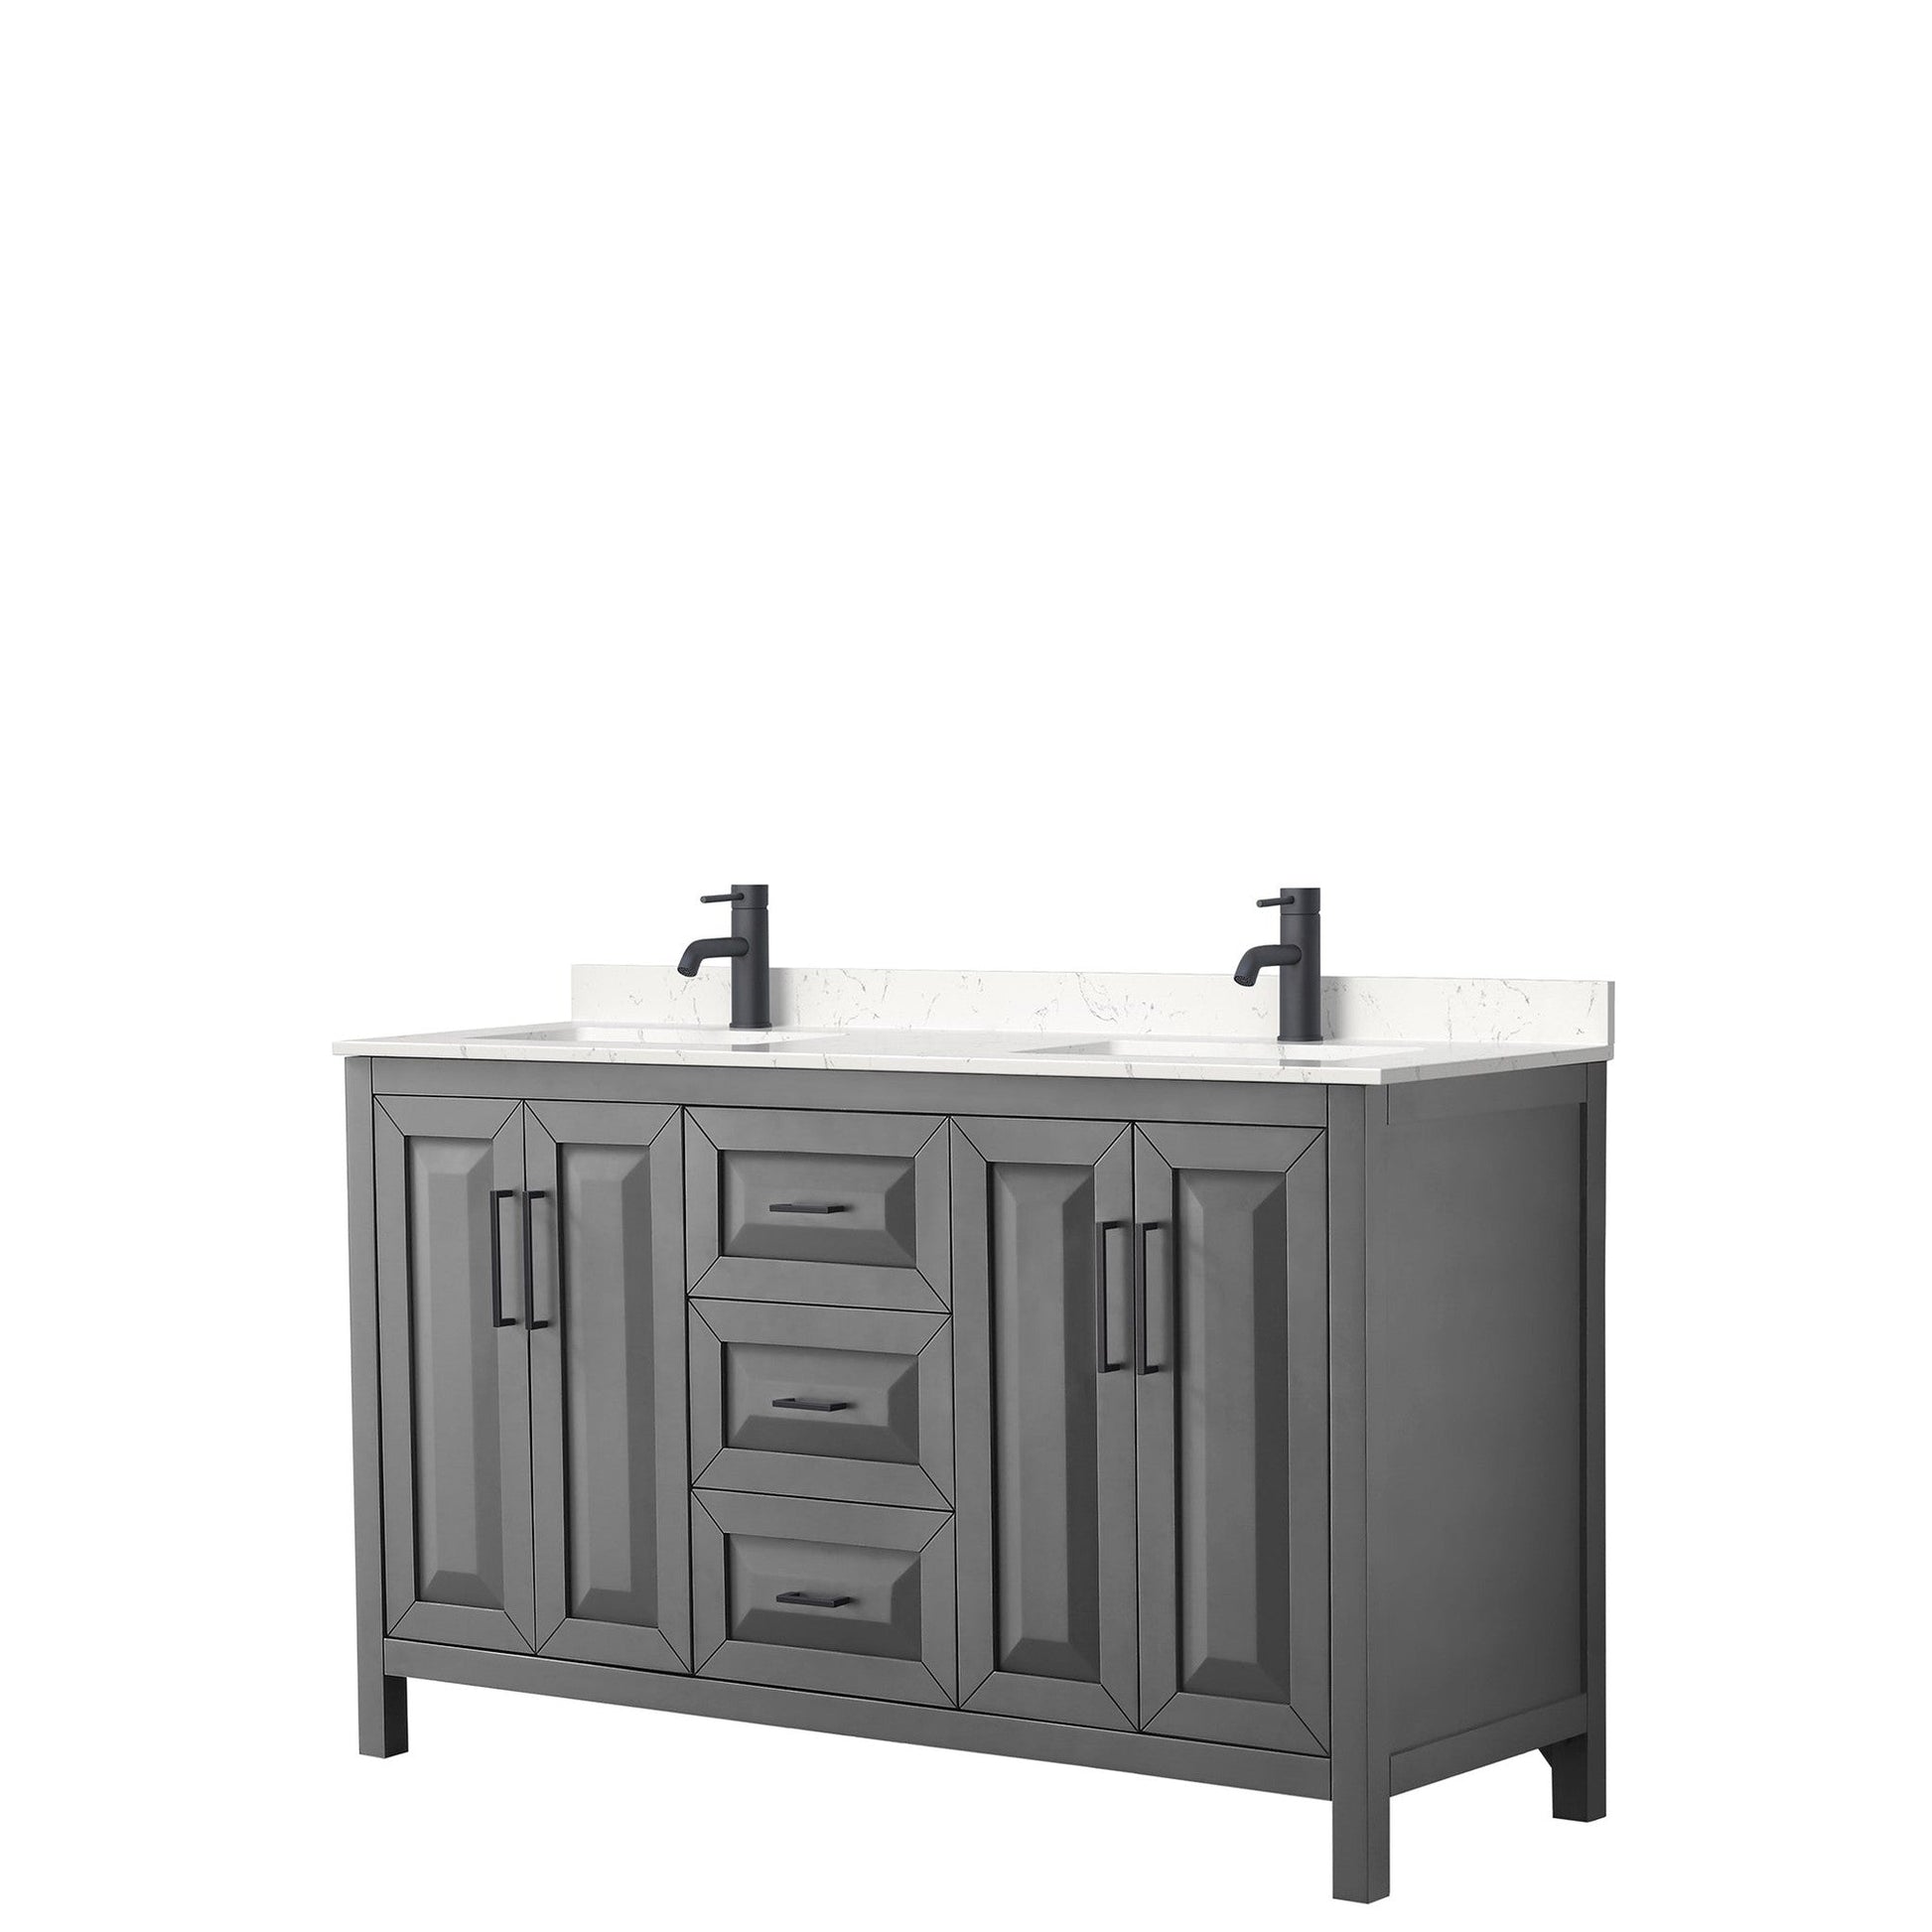 Daria 60" Double Bathroom Vanity in Dark Gray, Carrara Cultured Marble Countertop, Undermount Square Sinks, Matte Black Trim